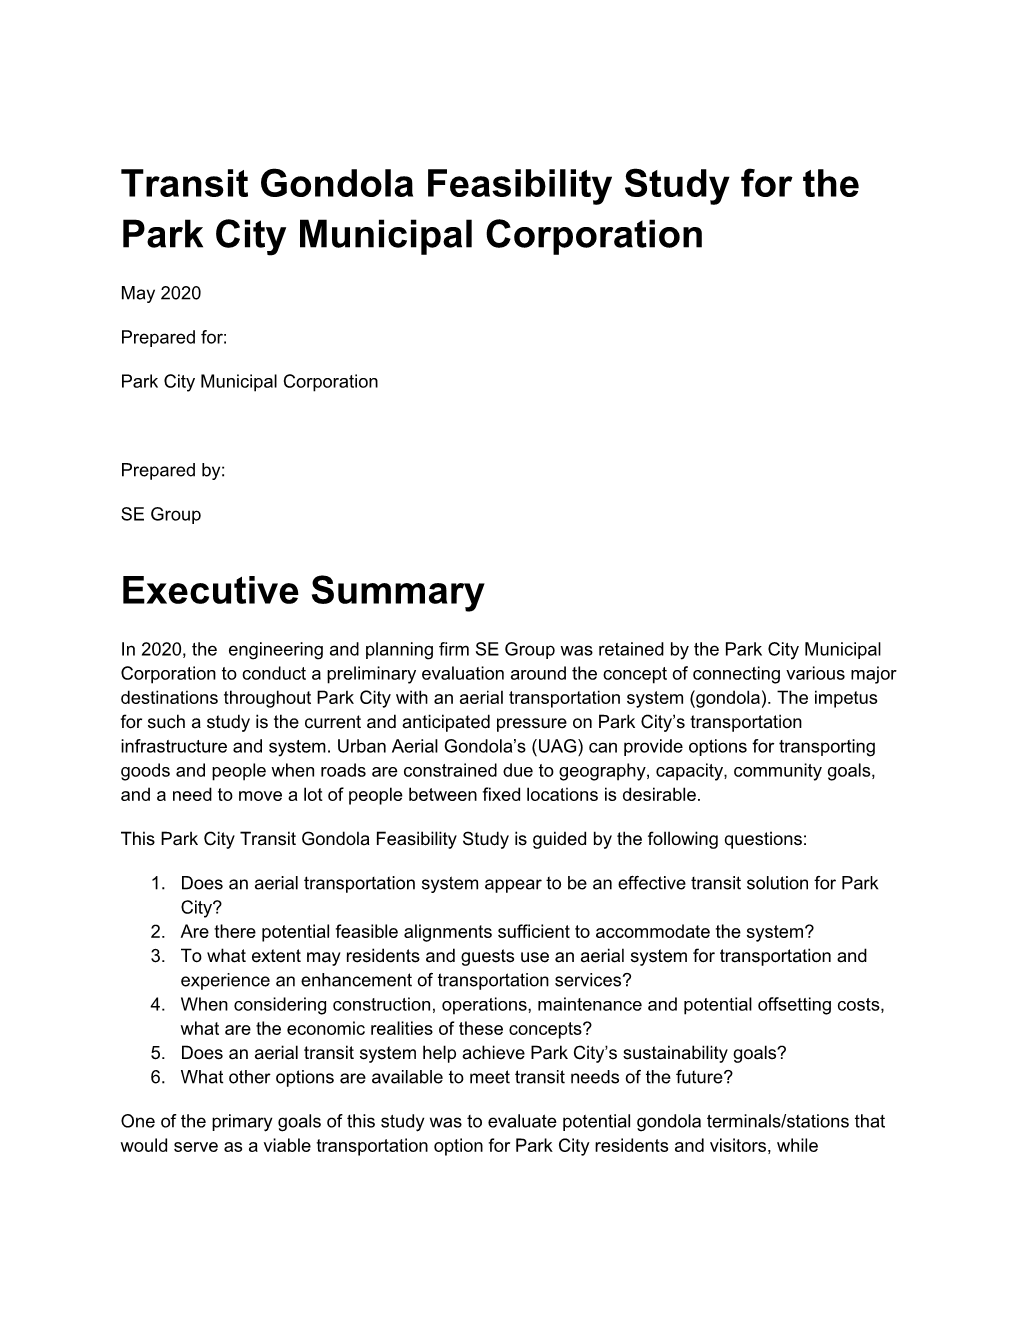 Transit Gondola Feasibility Study for the Park City Municipal Corporation